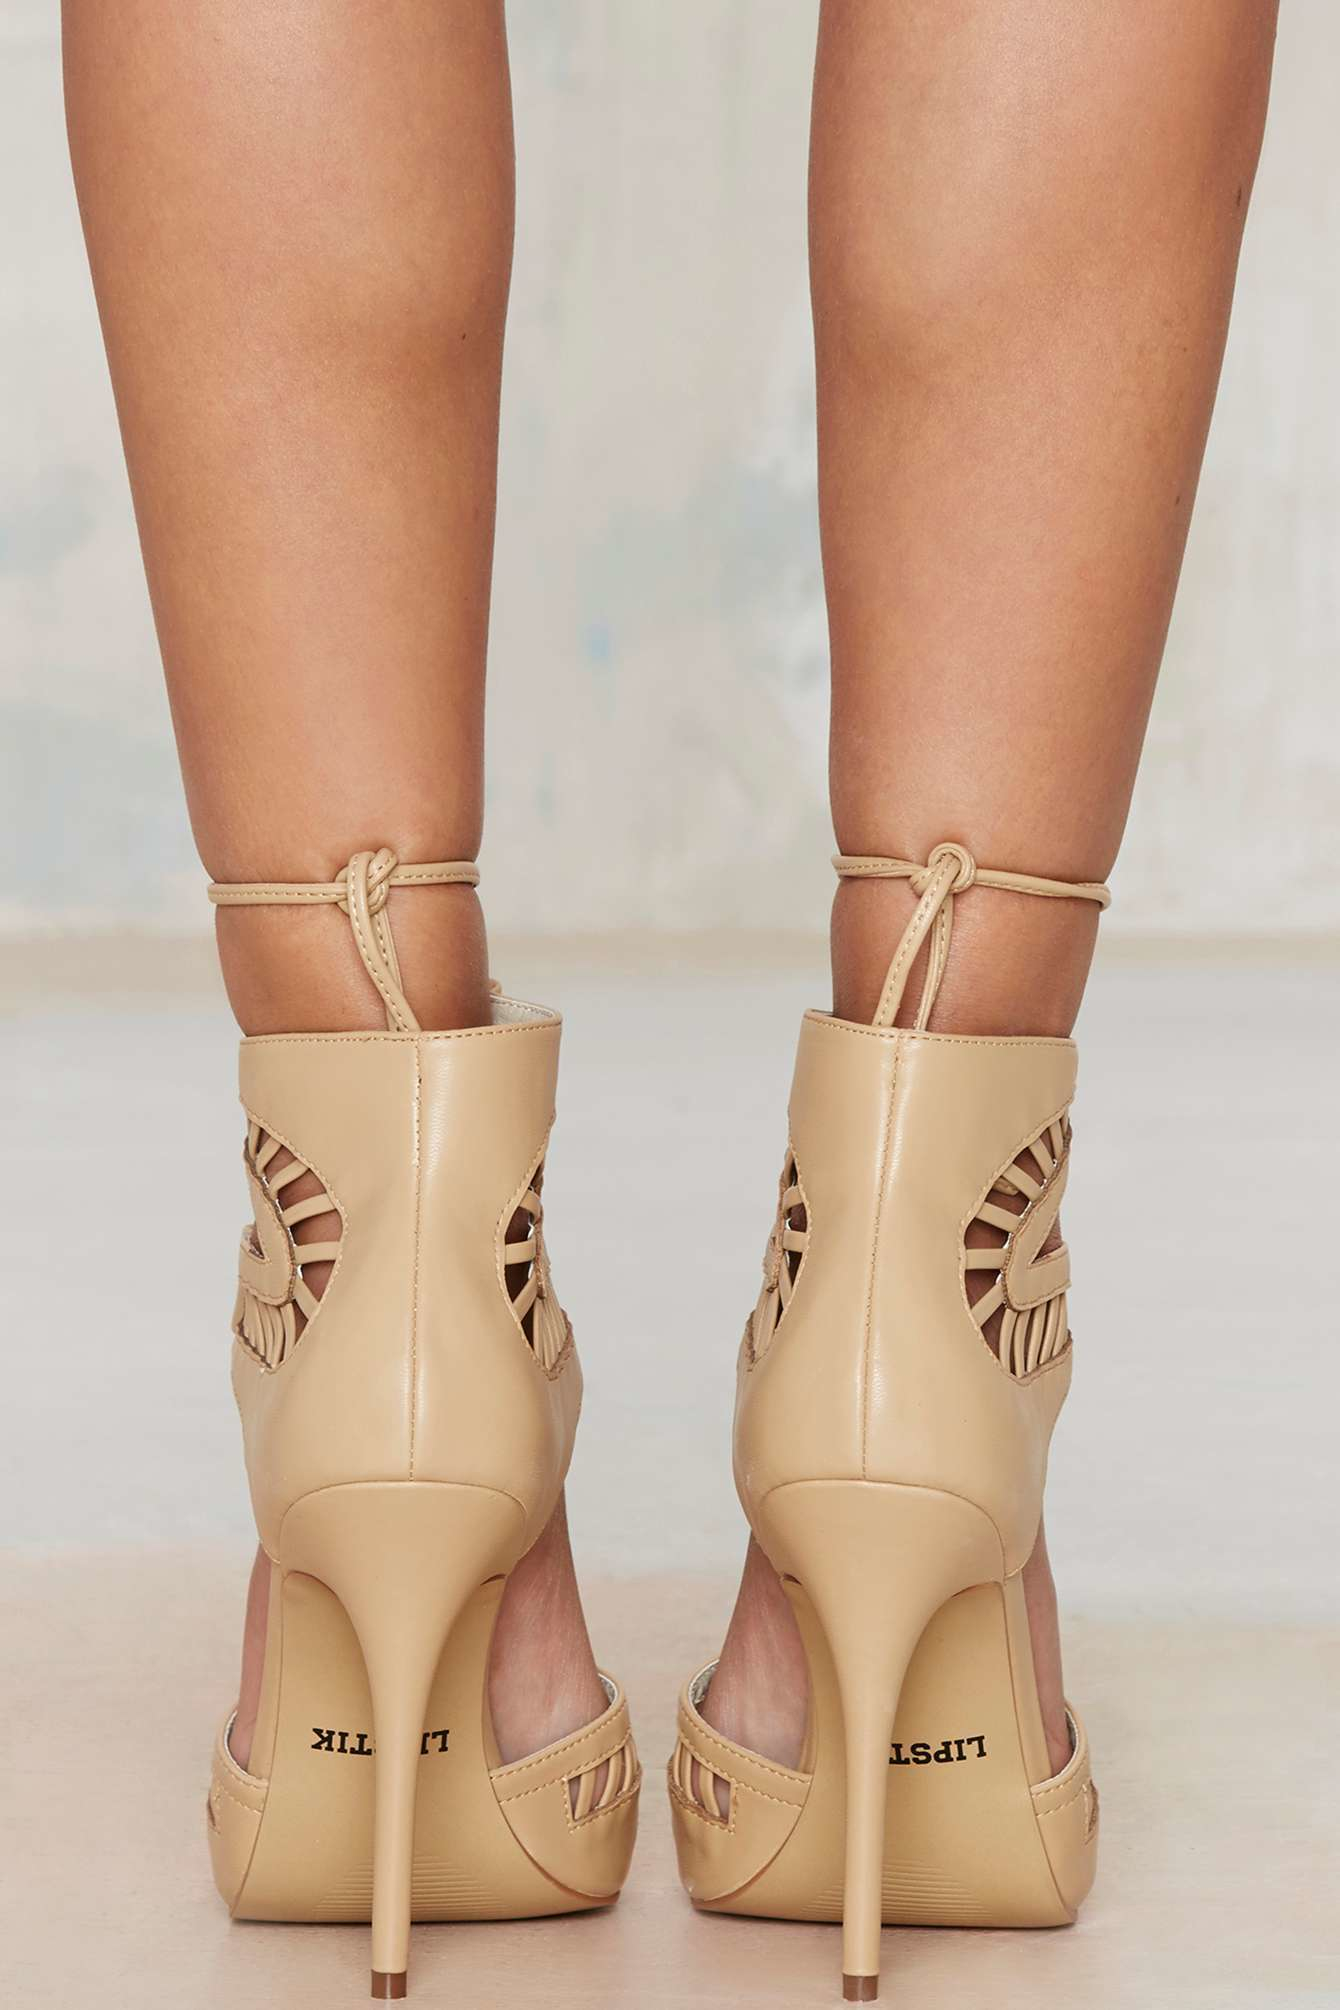 Lyst - Lipstik Shoes Kara Cutout Heel in Natural